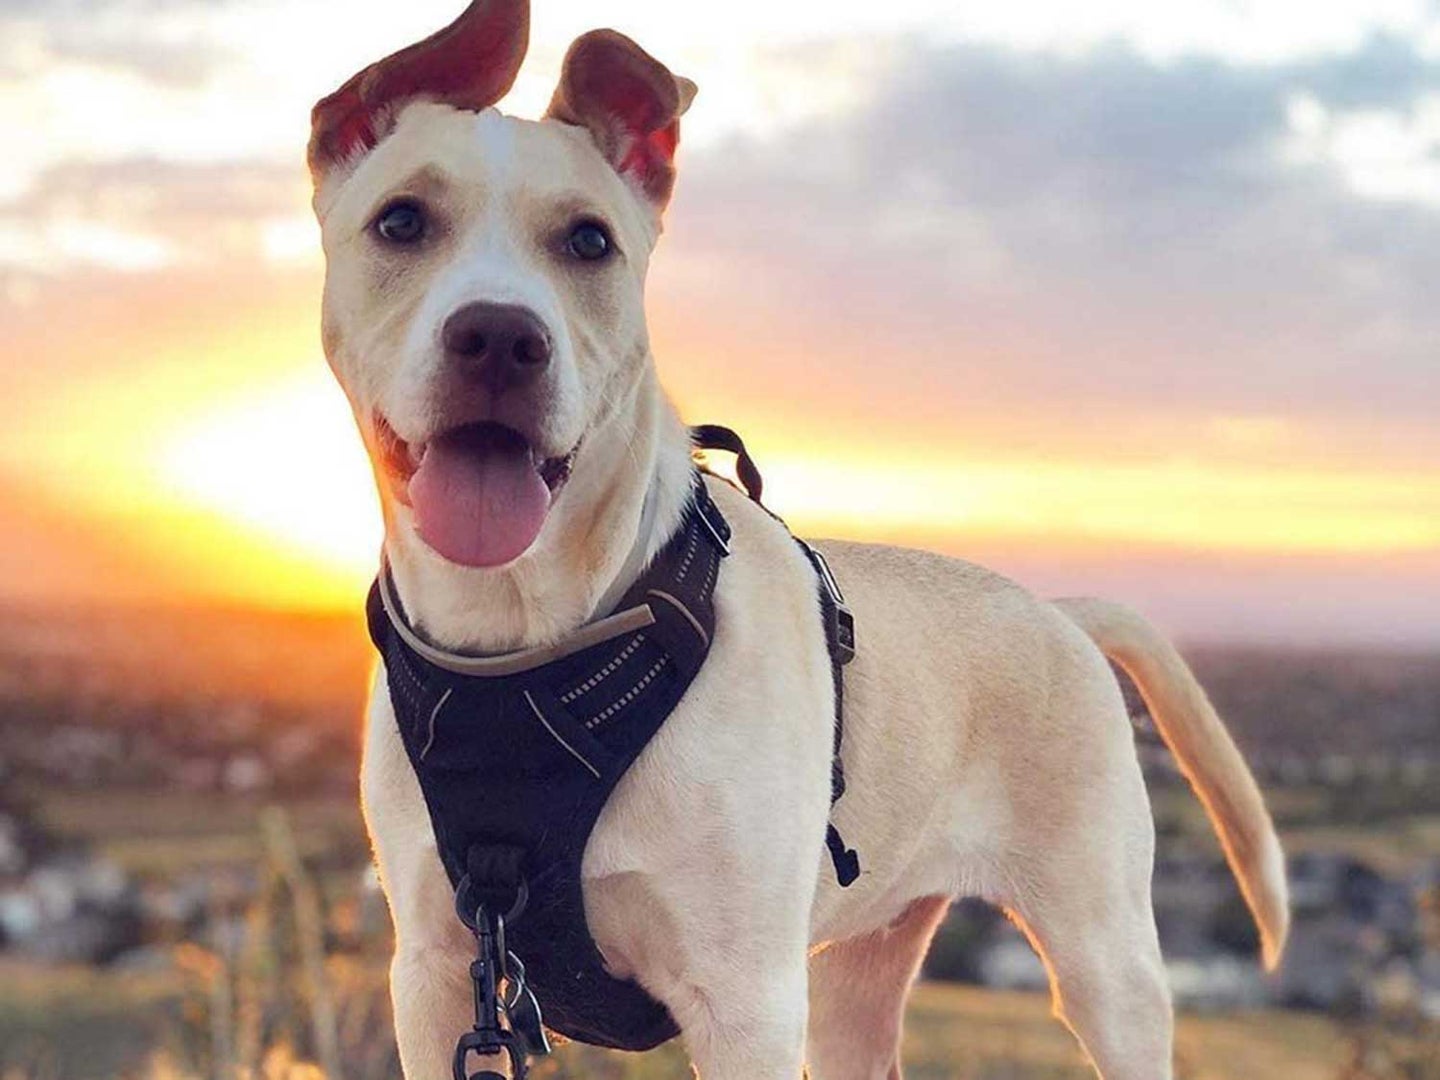 Dog wearing dog vest harness outdoors on walk.